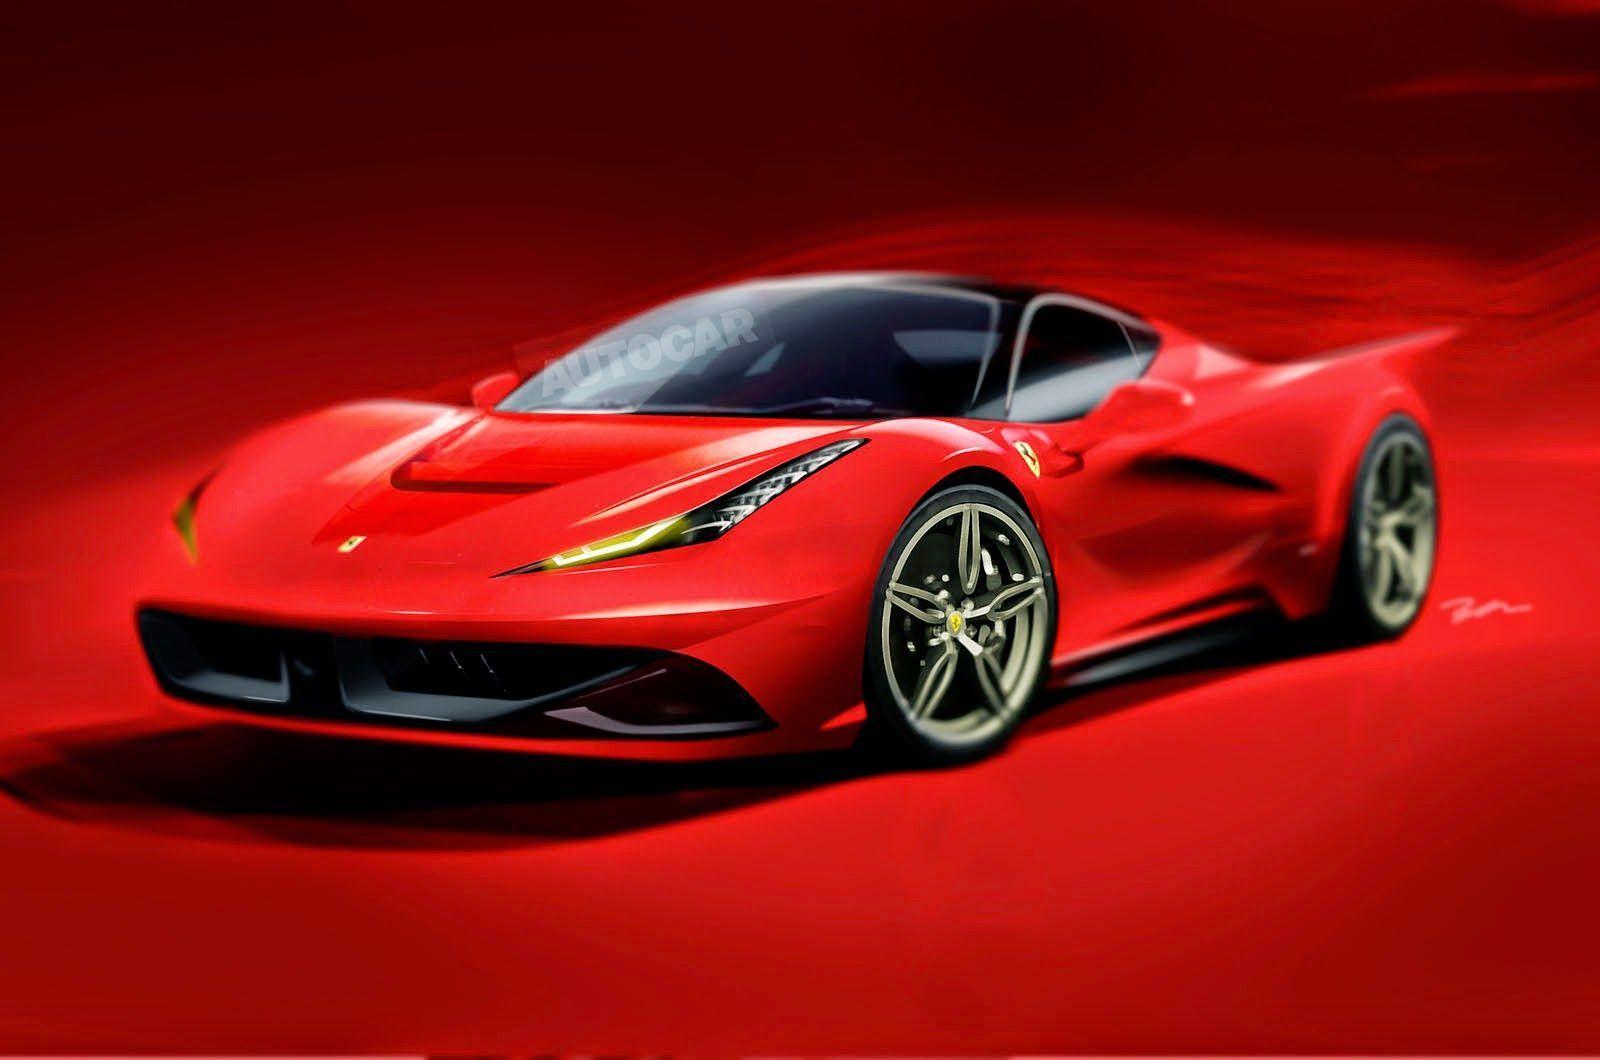 Ferrari 458 Car Wallpaper Desktop HD 2016 Cars